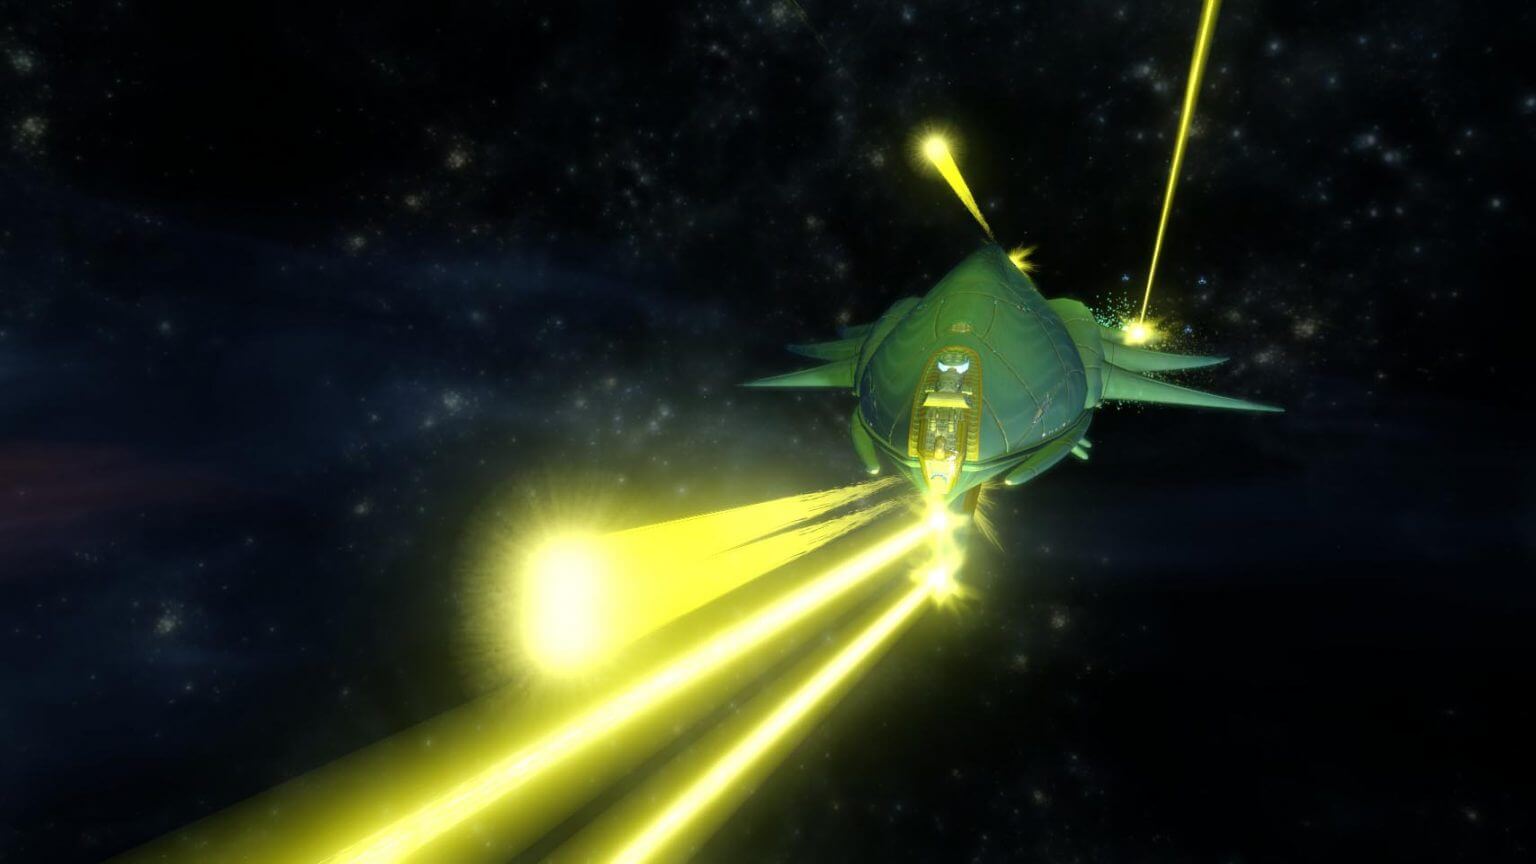 Star Trek Online Dewan pilot escort starships review – Vox ex Machina